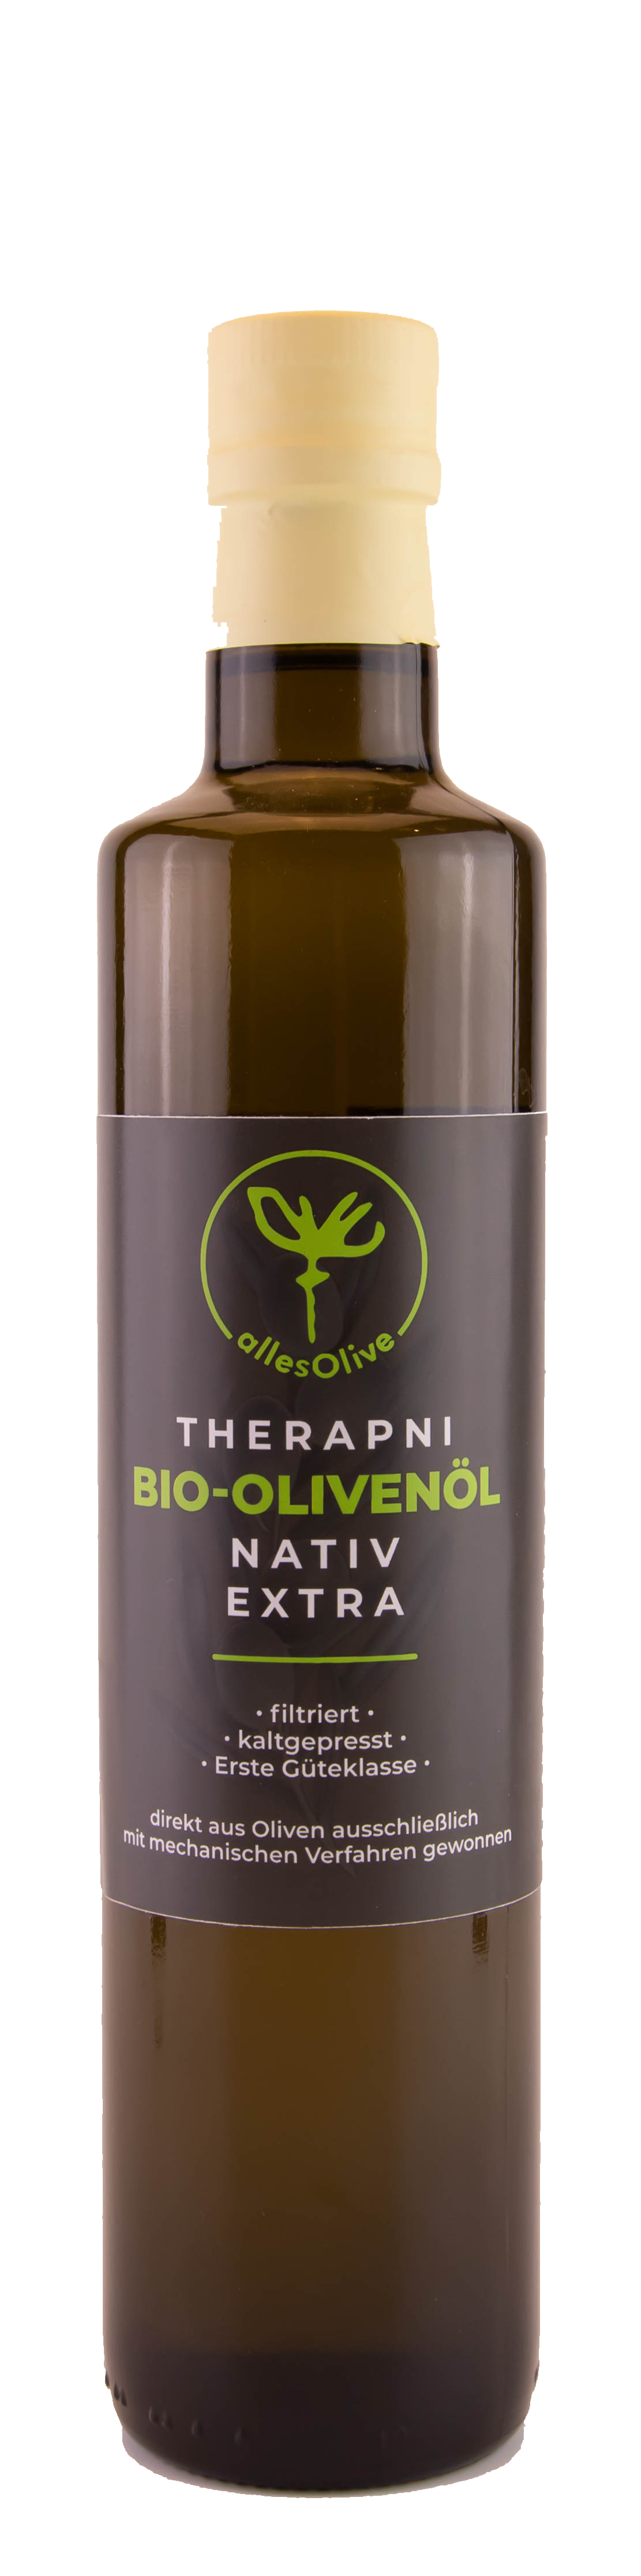 THERAPNI Natives Bio-Olivenöl Extra, gefiltert, 500ml Flasche